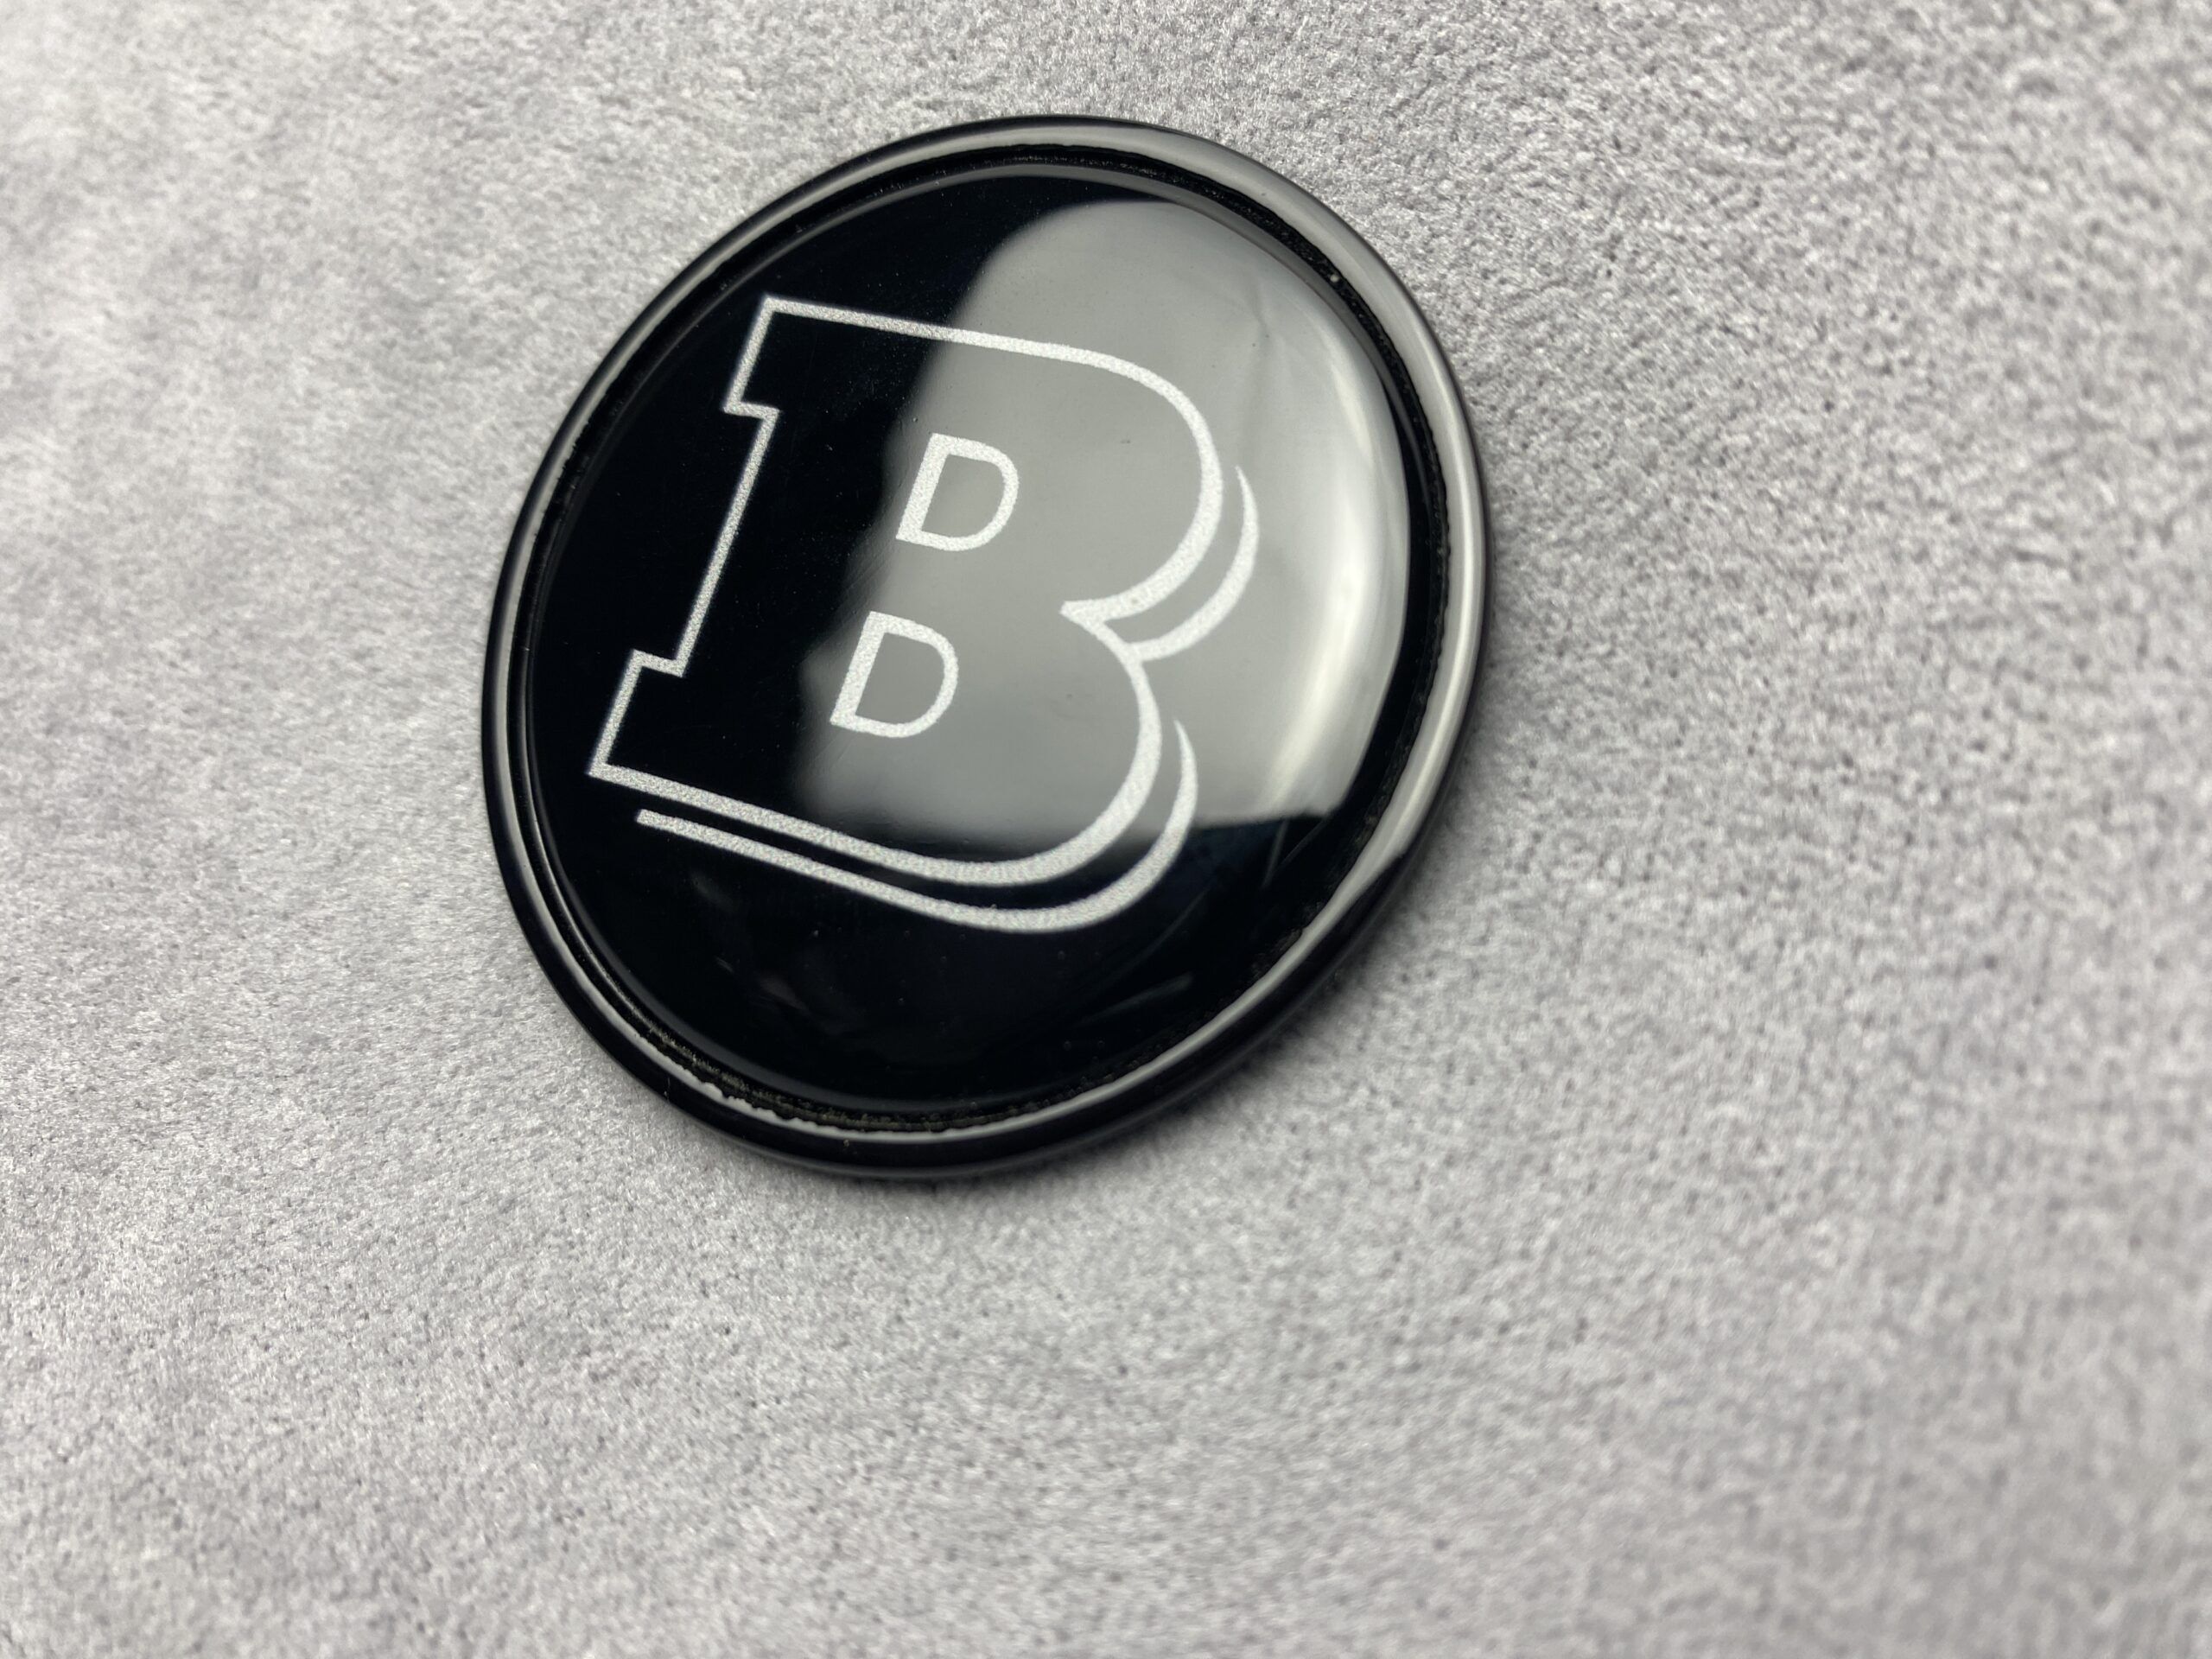 Brabus B Emblem for Trunk Mercedes-Benz S65 AMG C217 15-16